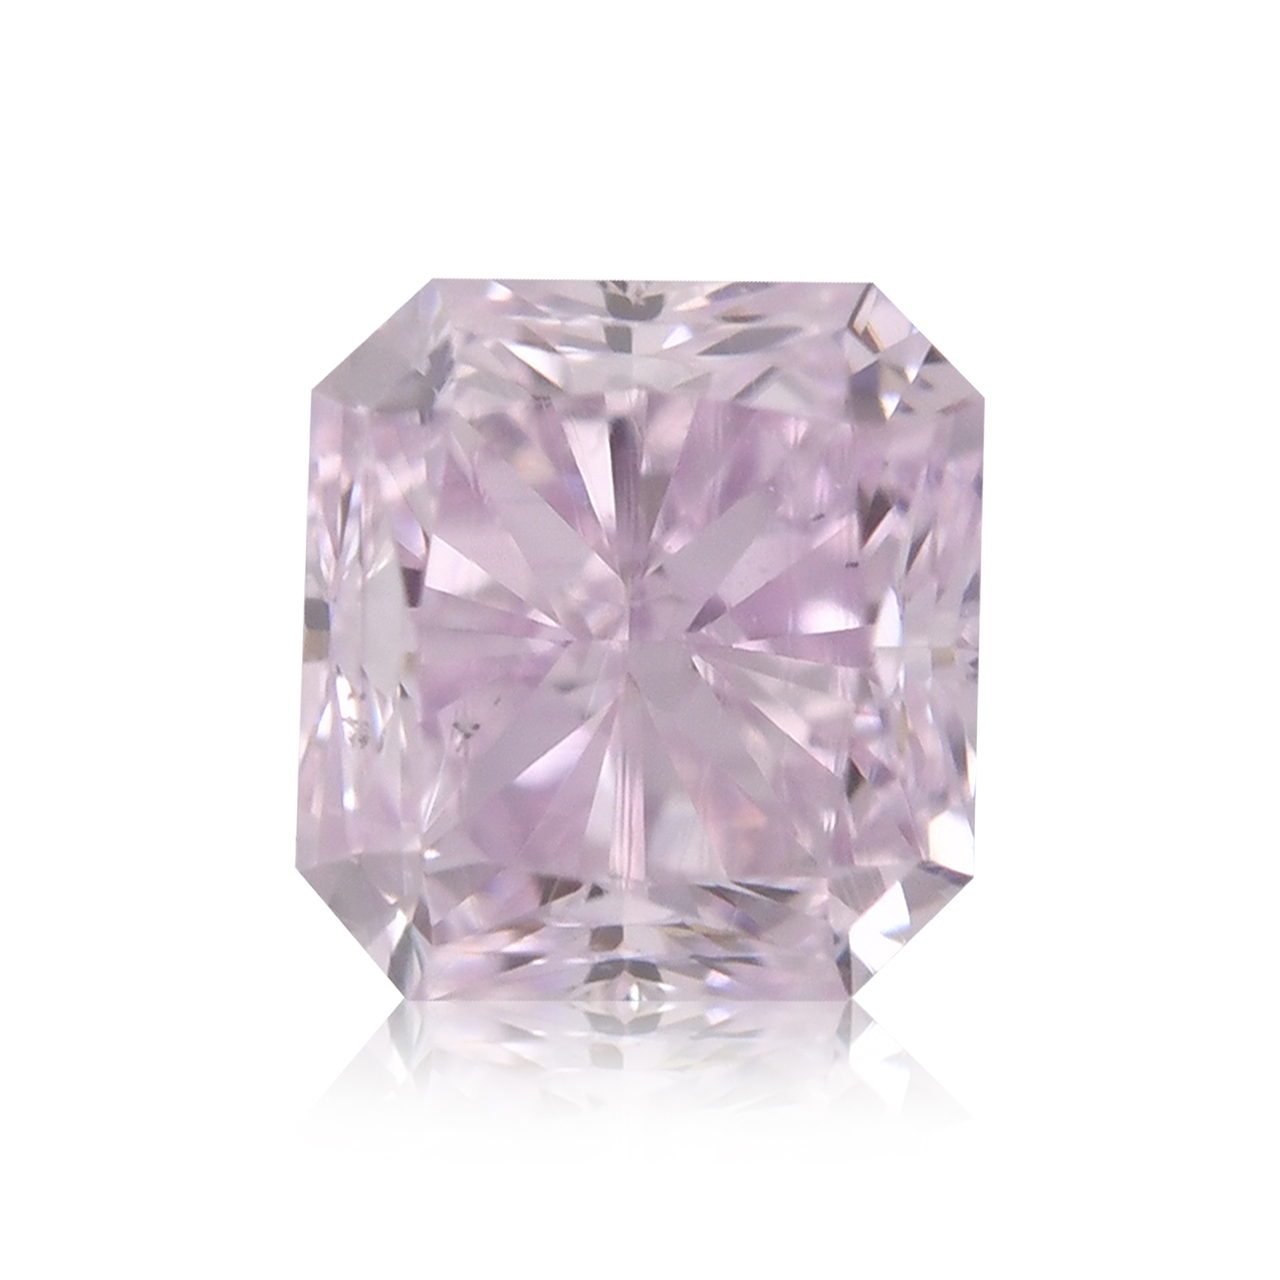 Leibish Fancy Purple Radiant Diamond 0.36 ct SI2 GIA